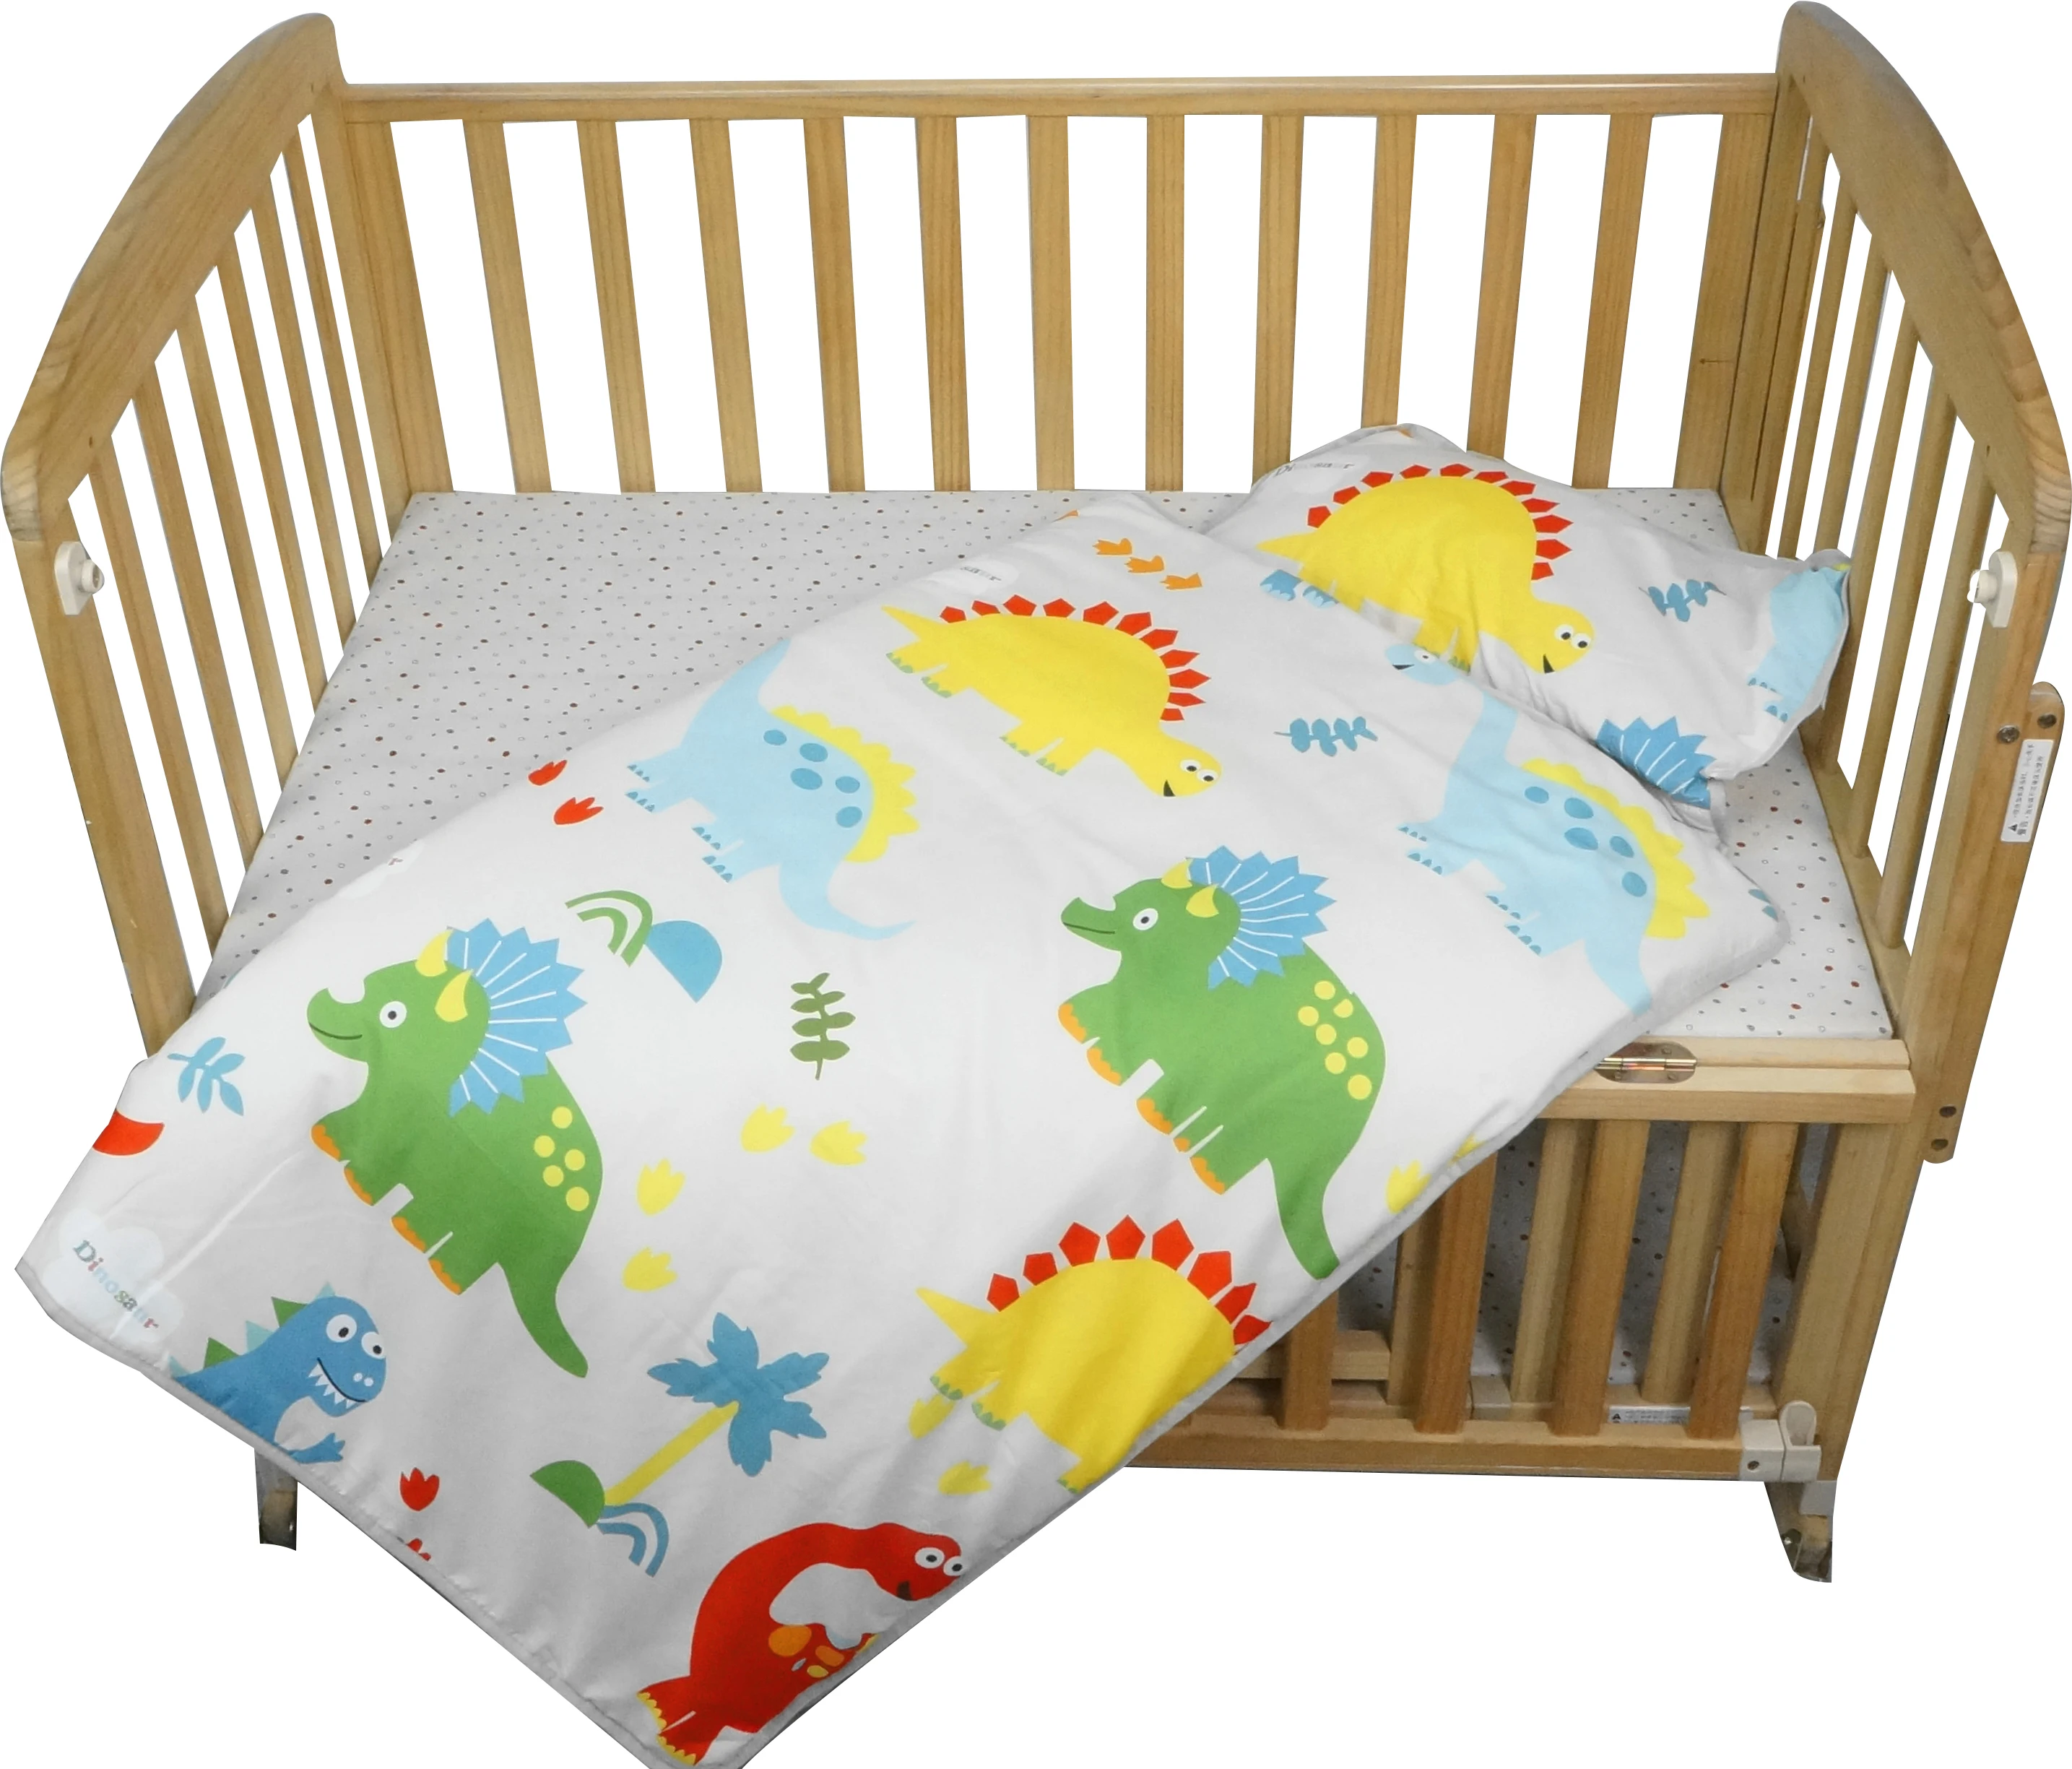 

Nap Mat with Removable Pillow for Kids Toddler Boys Girls Daycare Preschool Kindergarten Sleeping Bag 100% Cotton